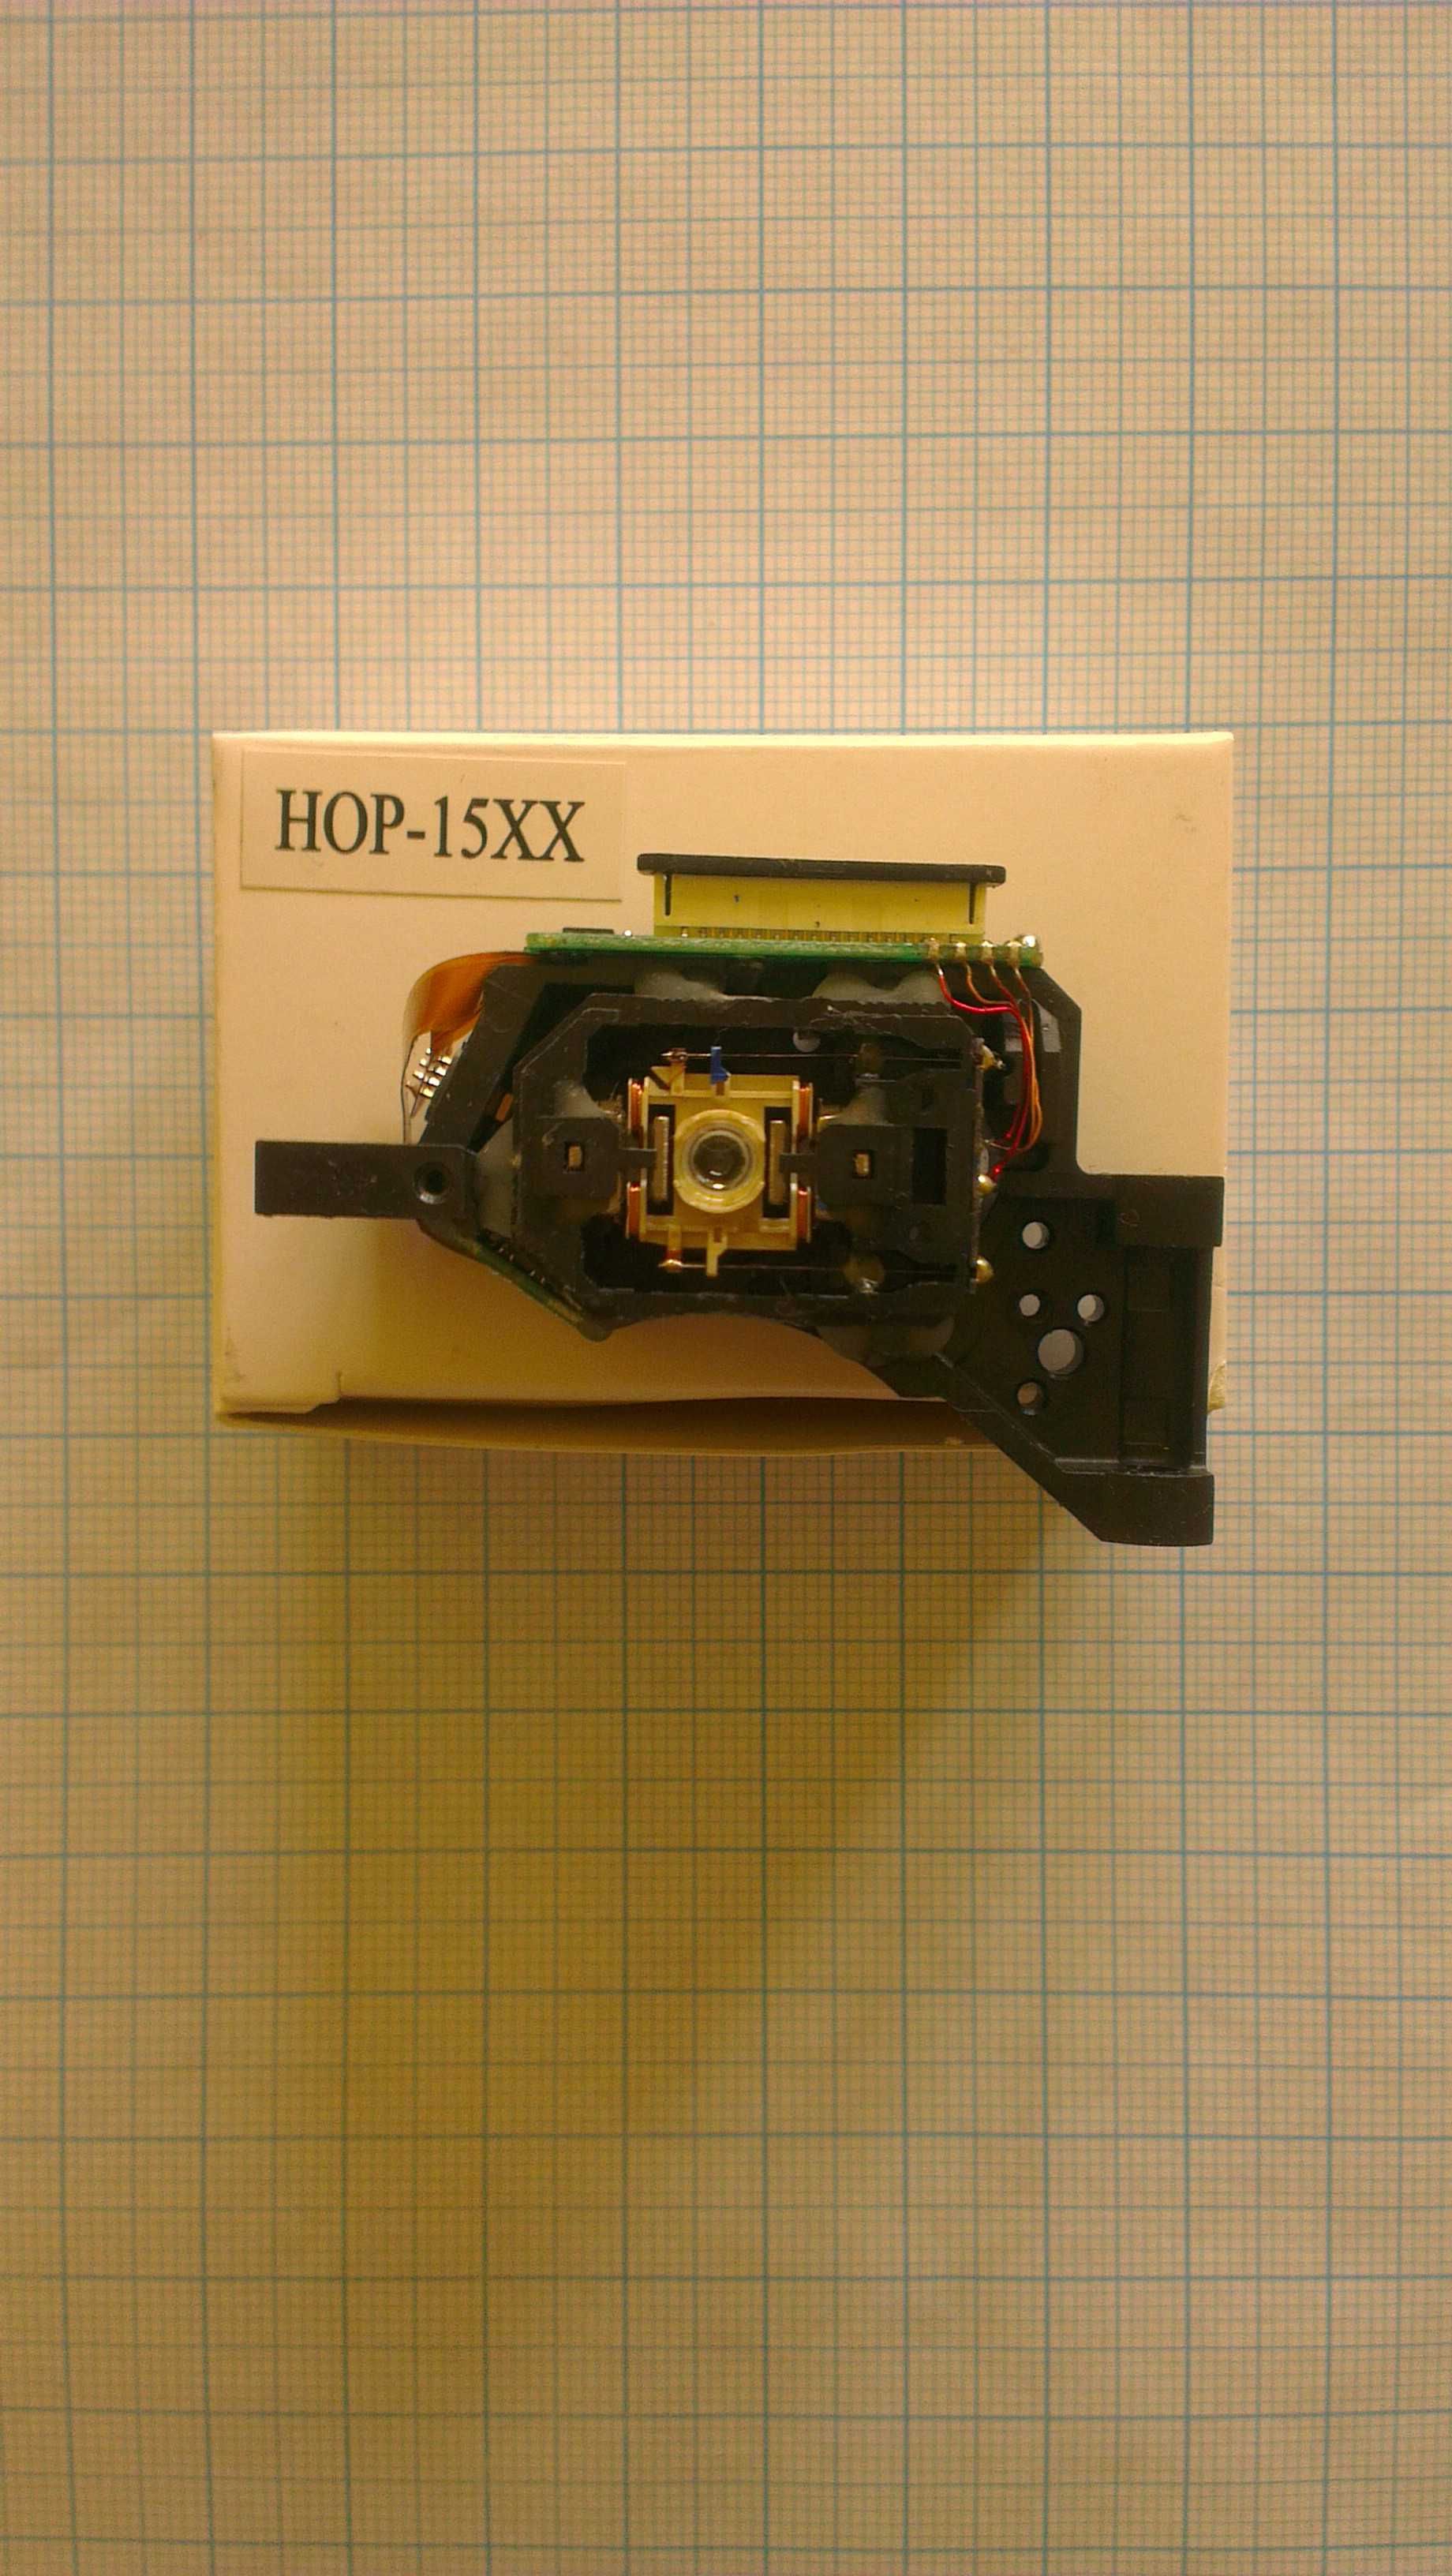 1шт. Лазер Laser HOP 15XX лазерна головка XBOX 360